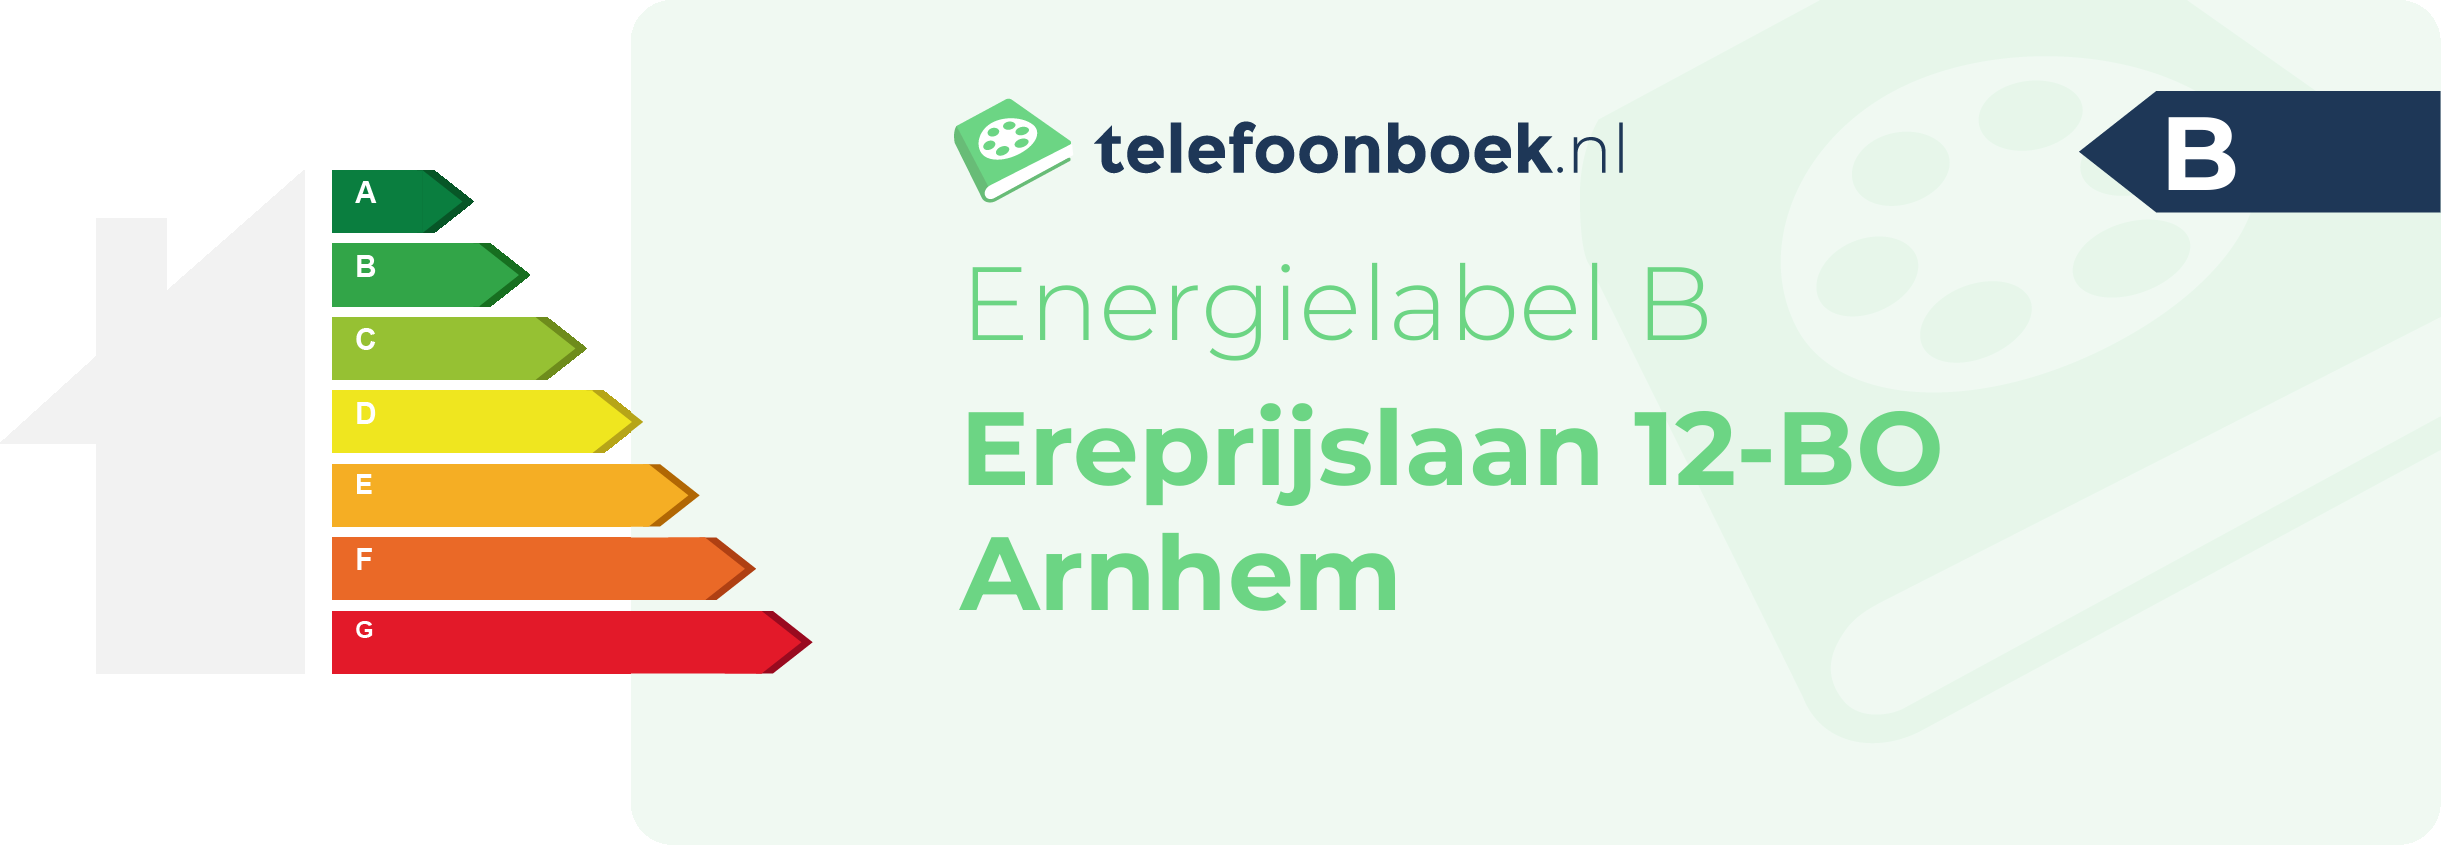 Energielabel Ereprijslaan 12-BO Arnhem